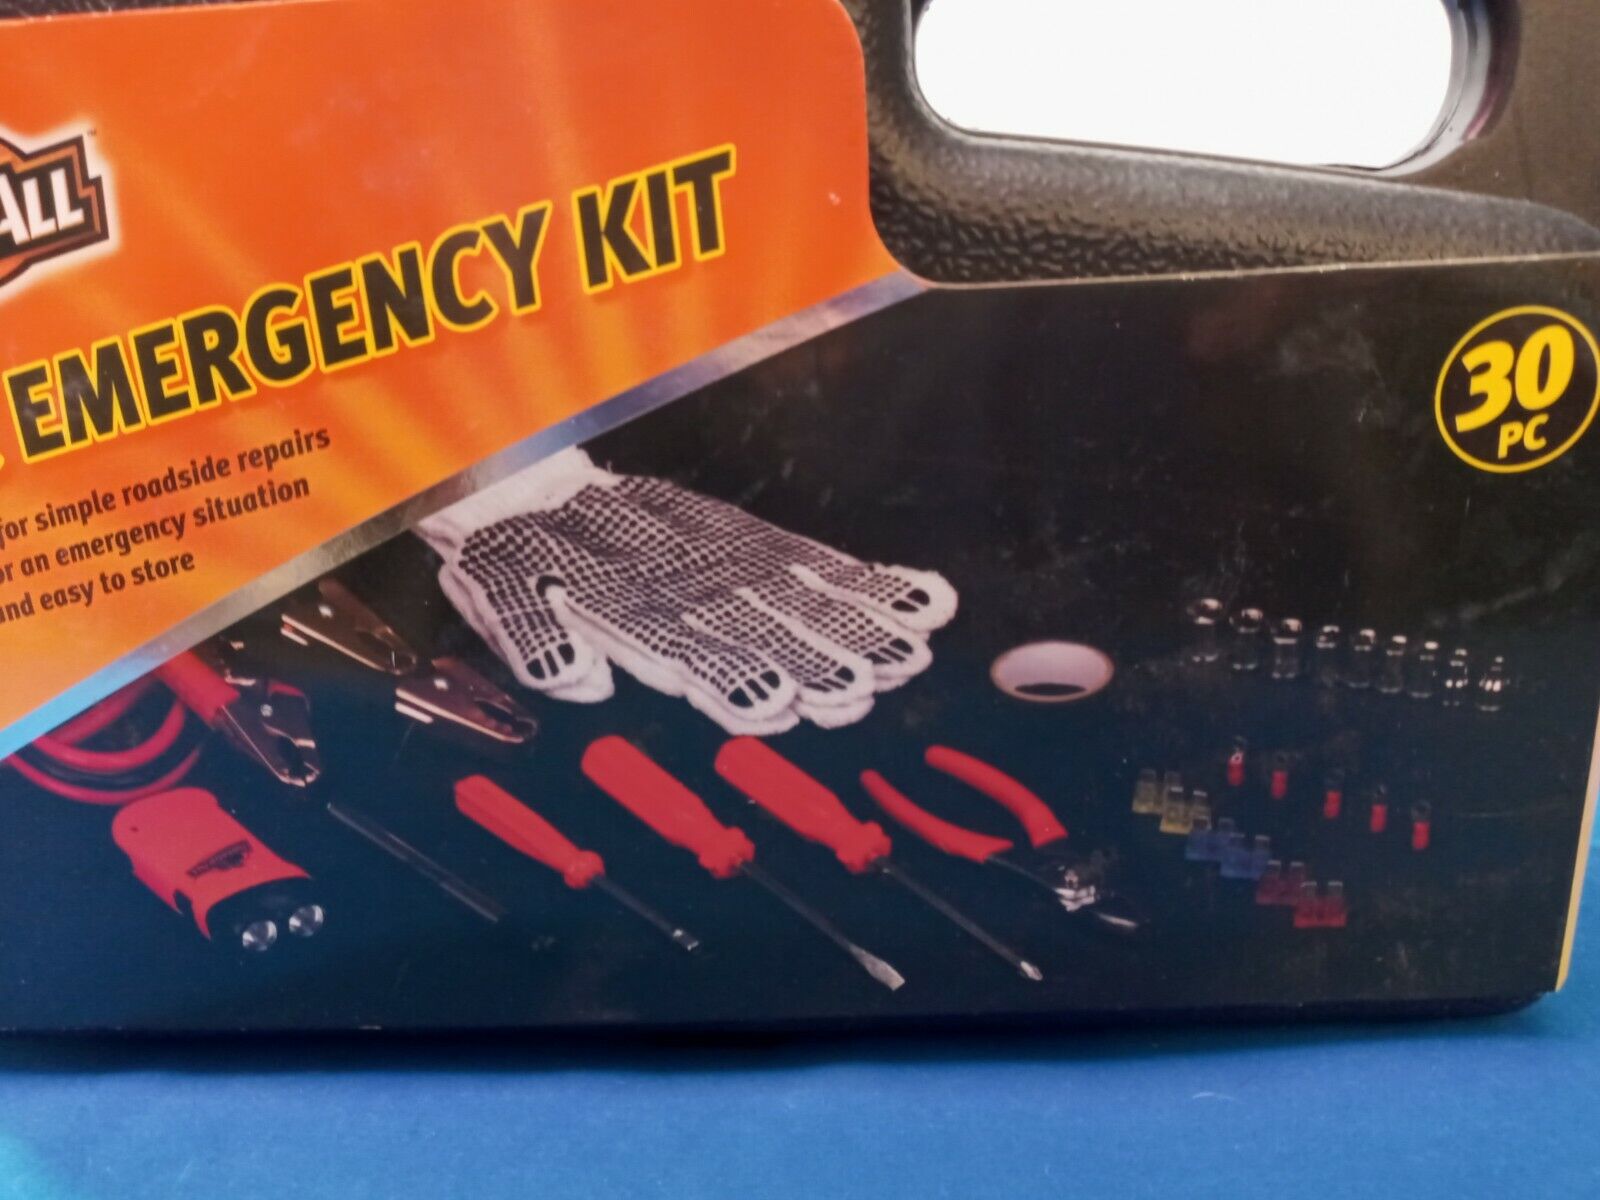 NEW Armor All Car Essentials Kit 3pc Bundle Essential Emergency Tools